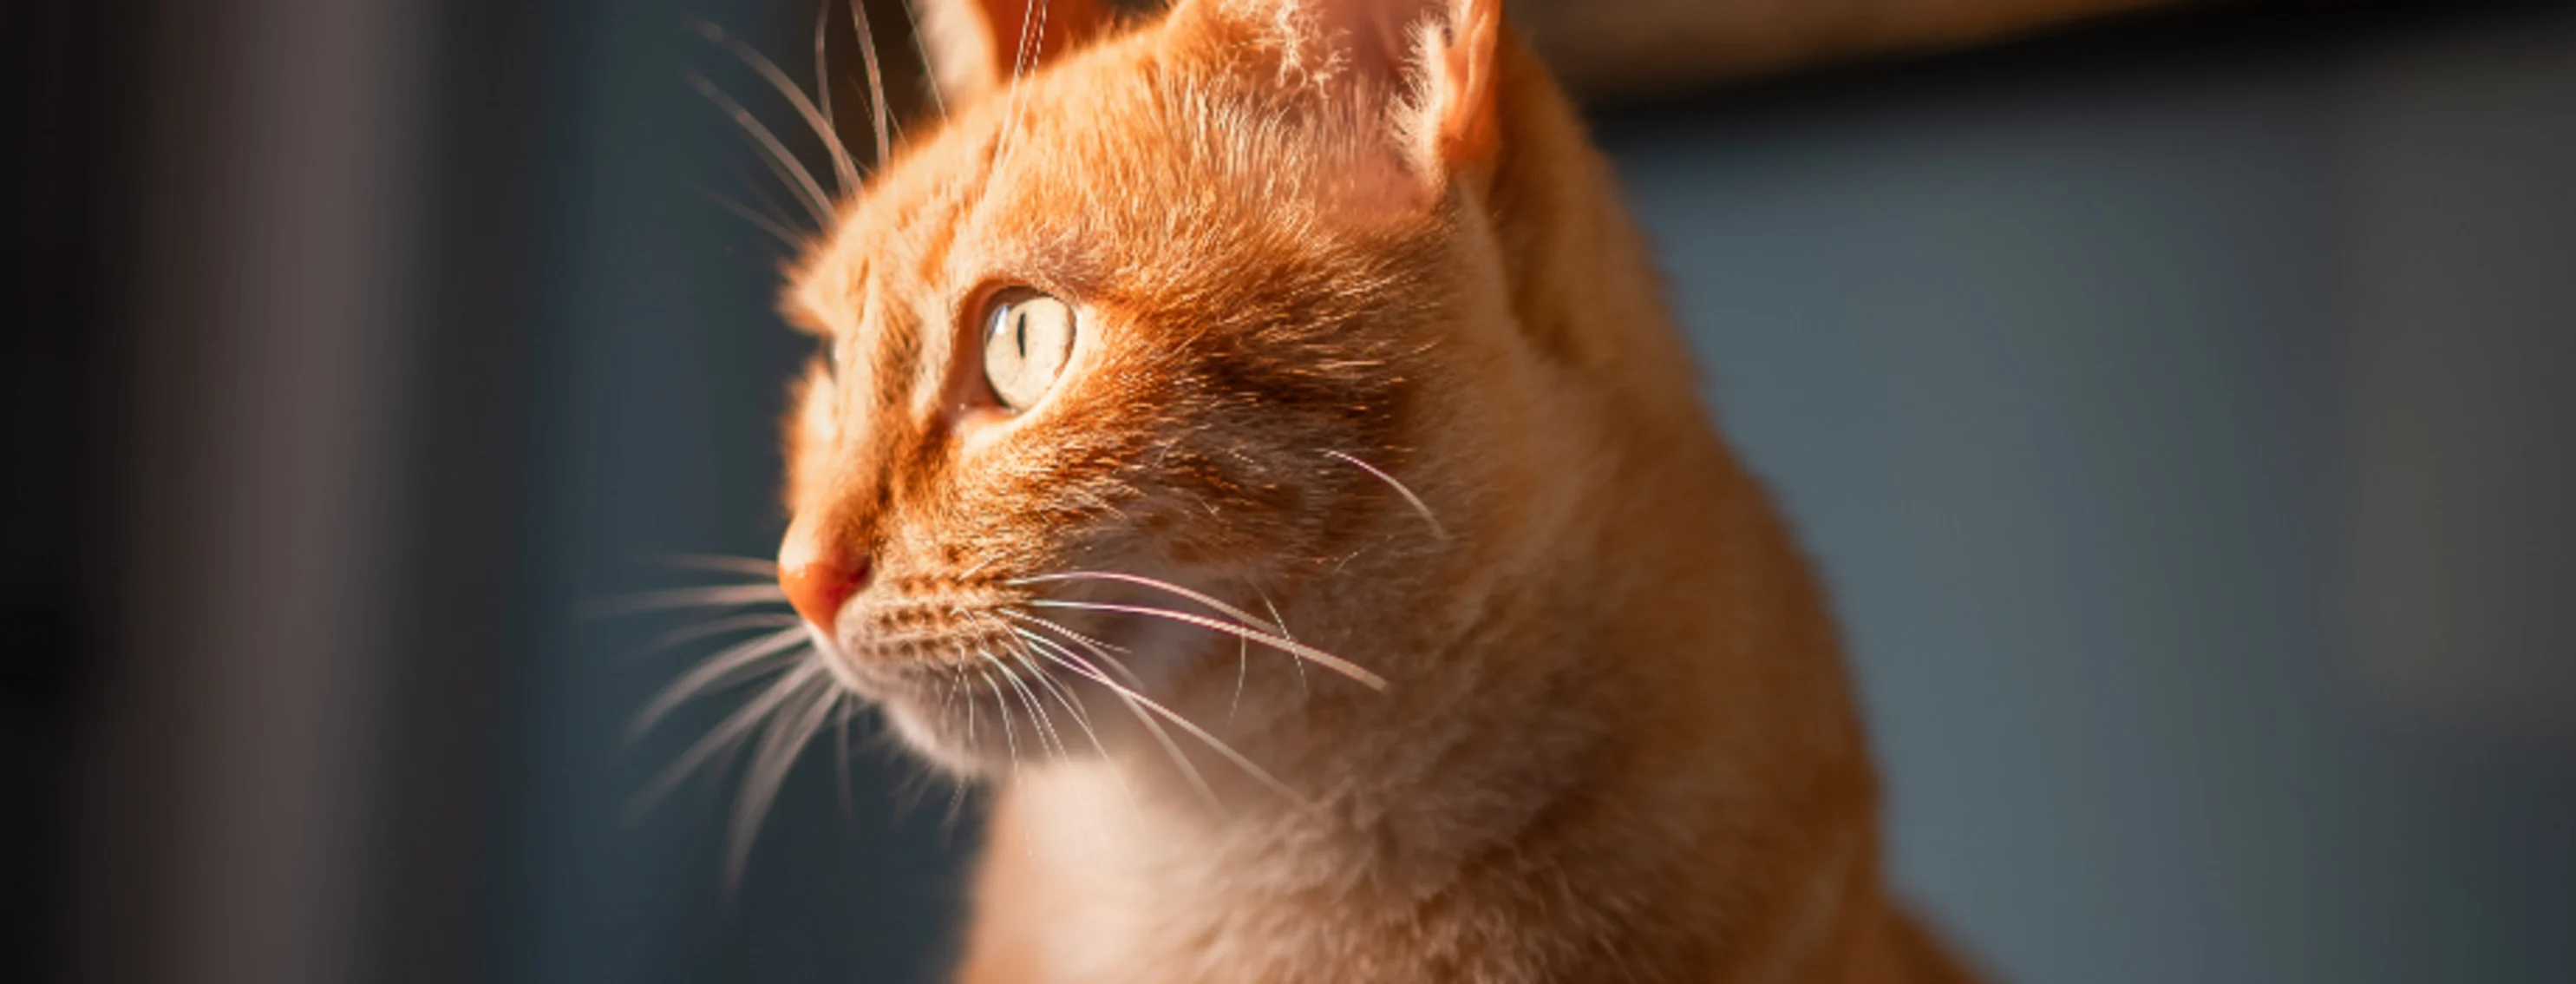 Orange cat with light shining on its face